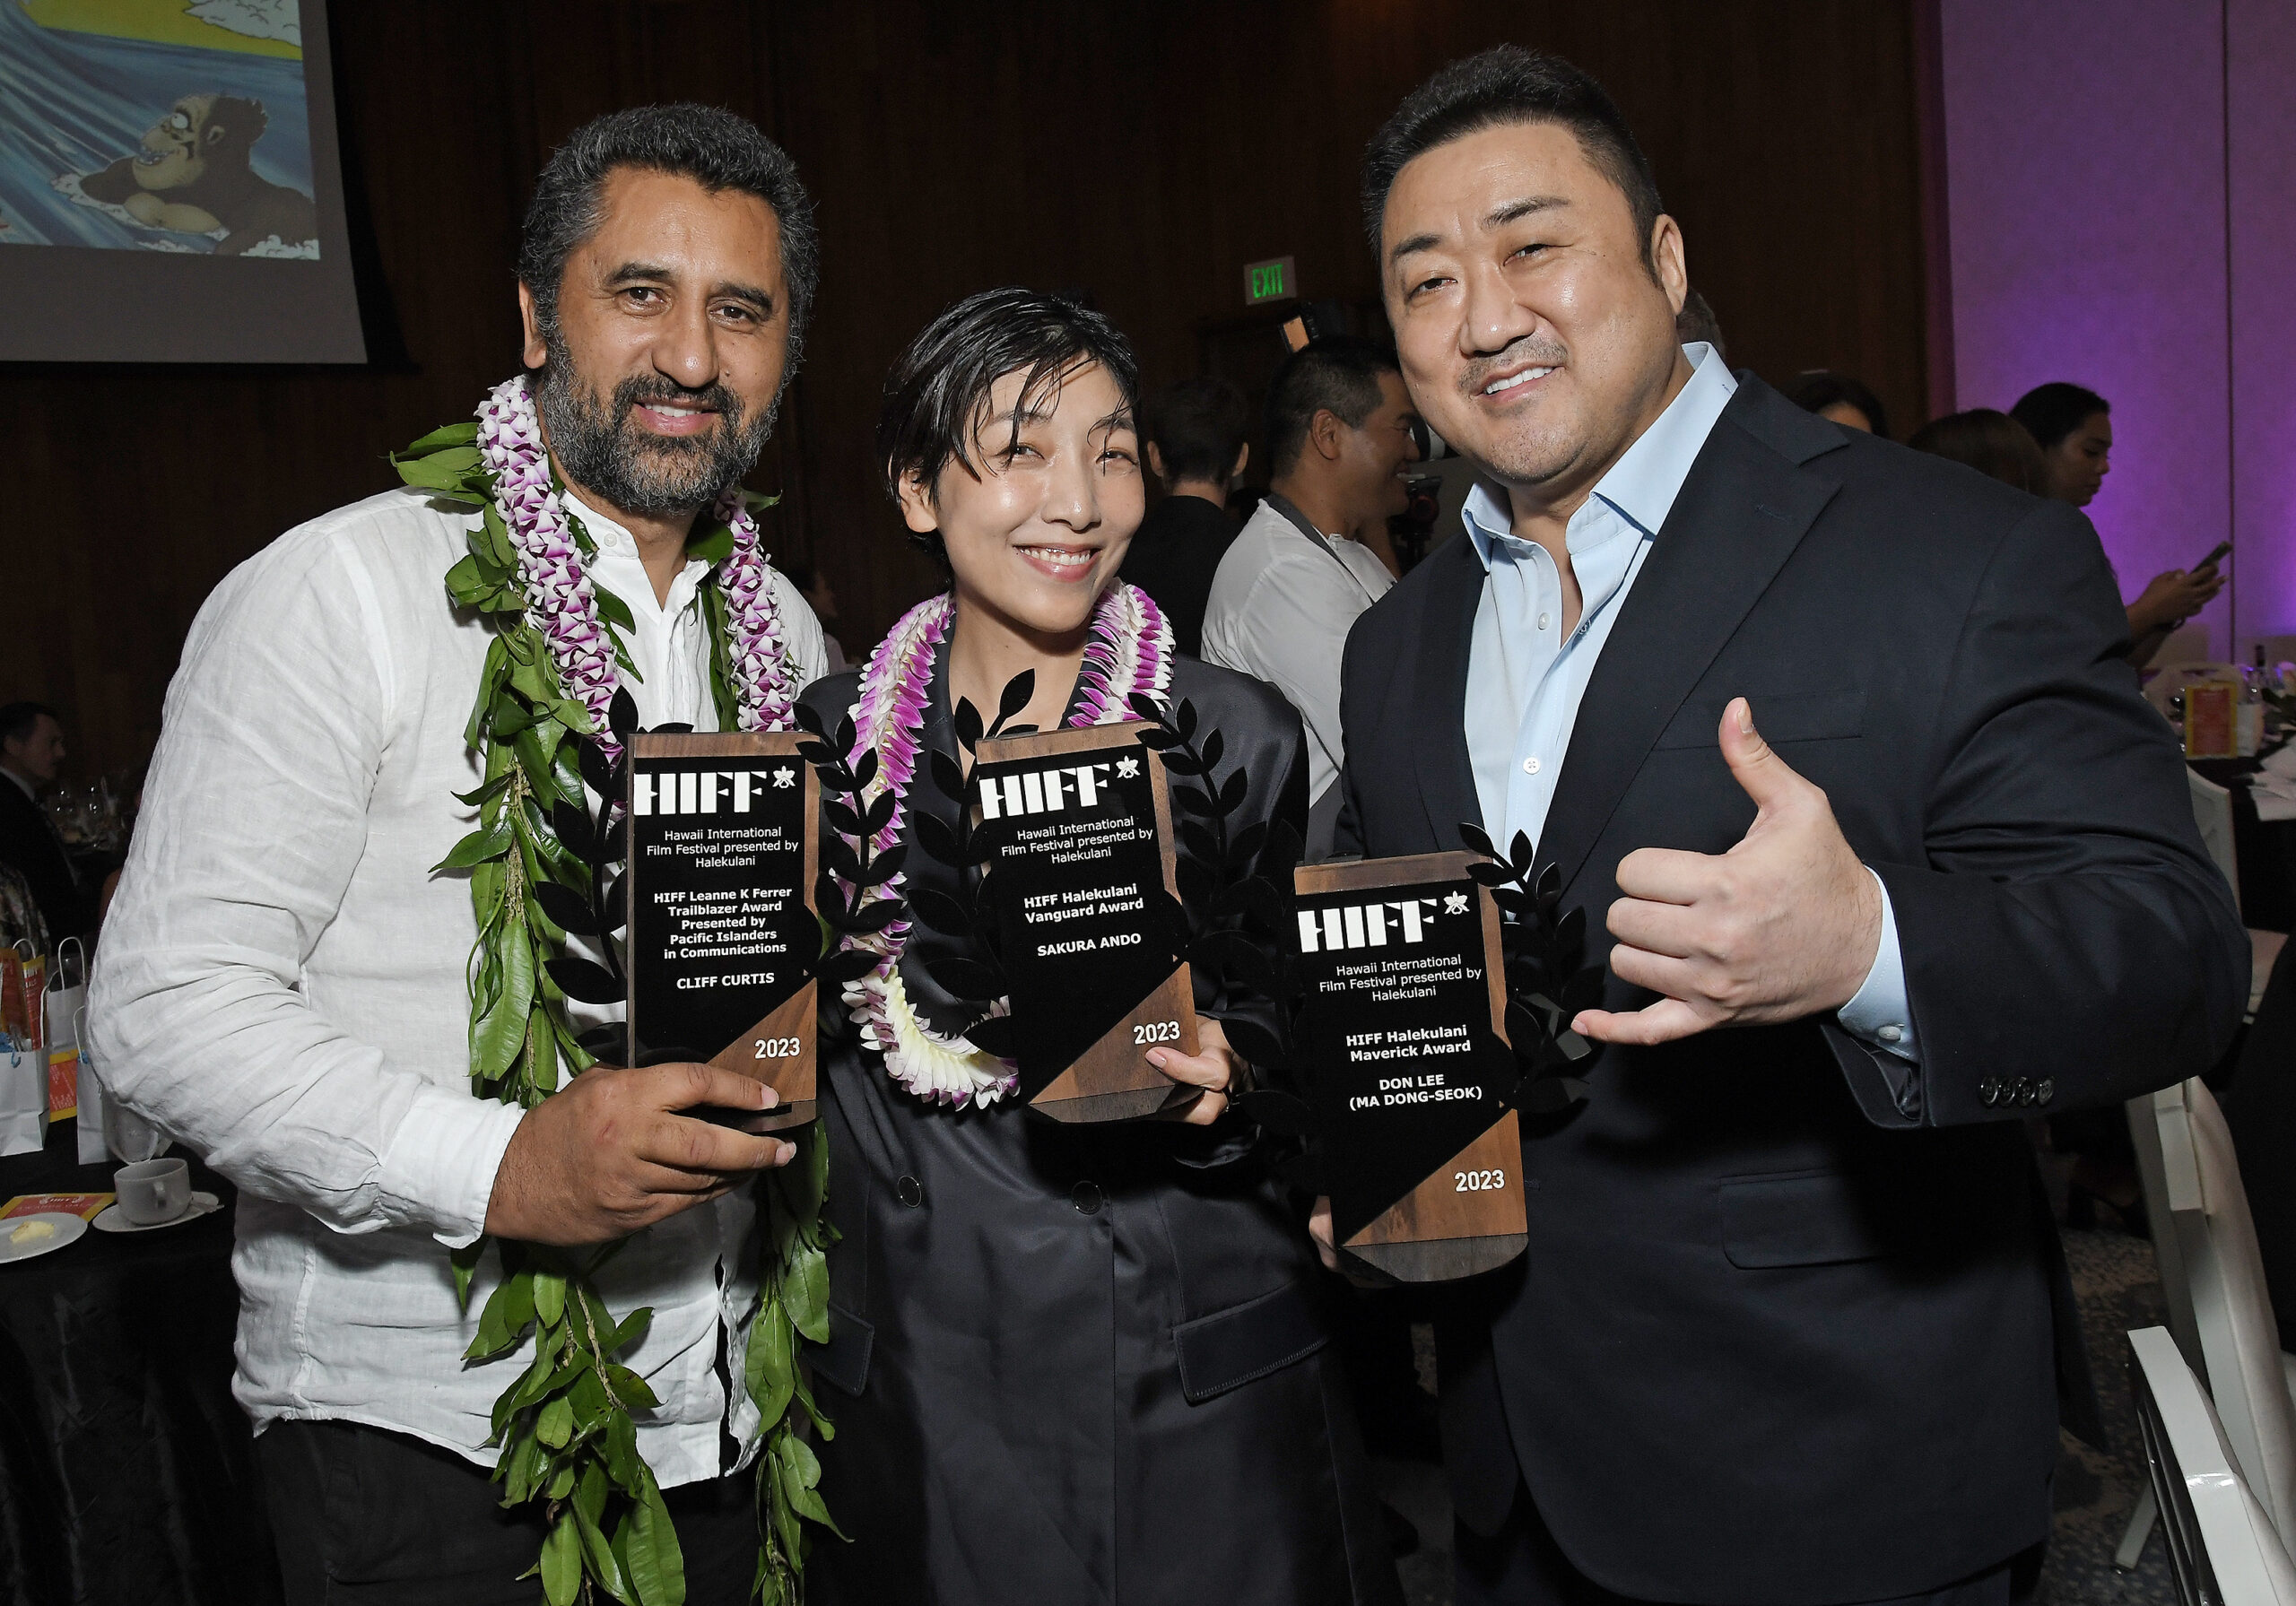 HIFF43 Announces Honorees & Jury Award Winners, HIFF